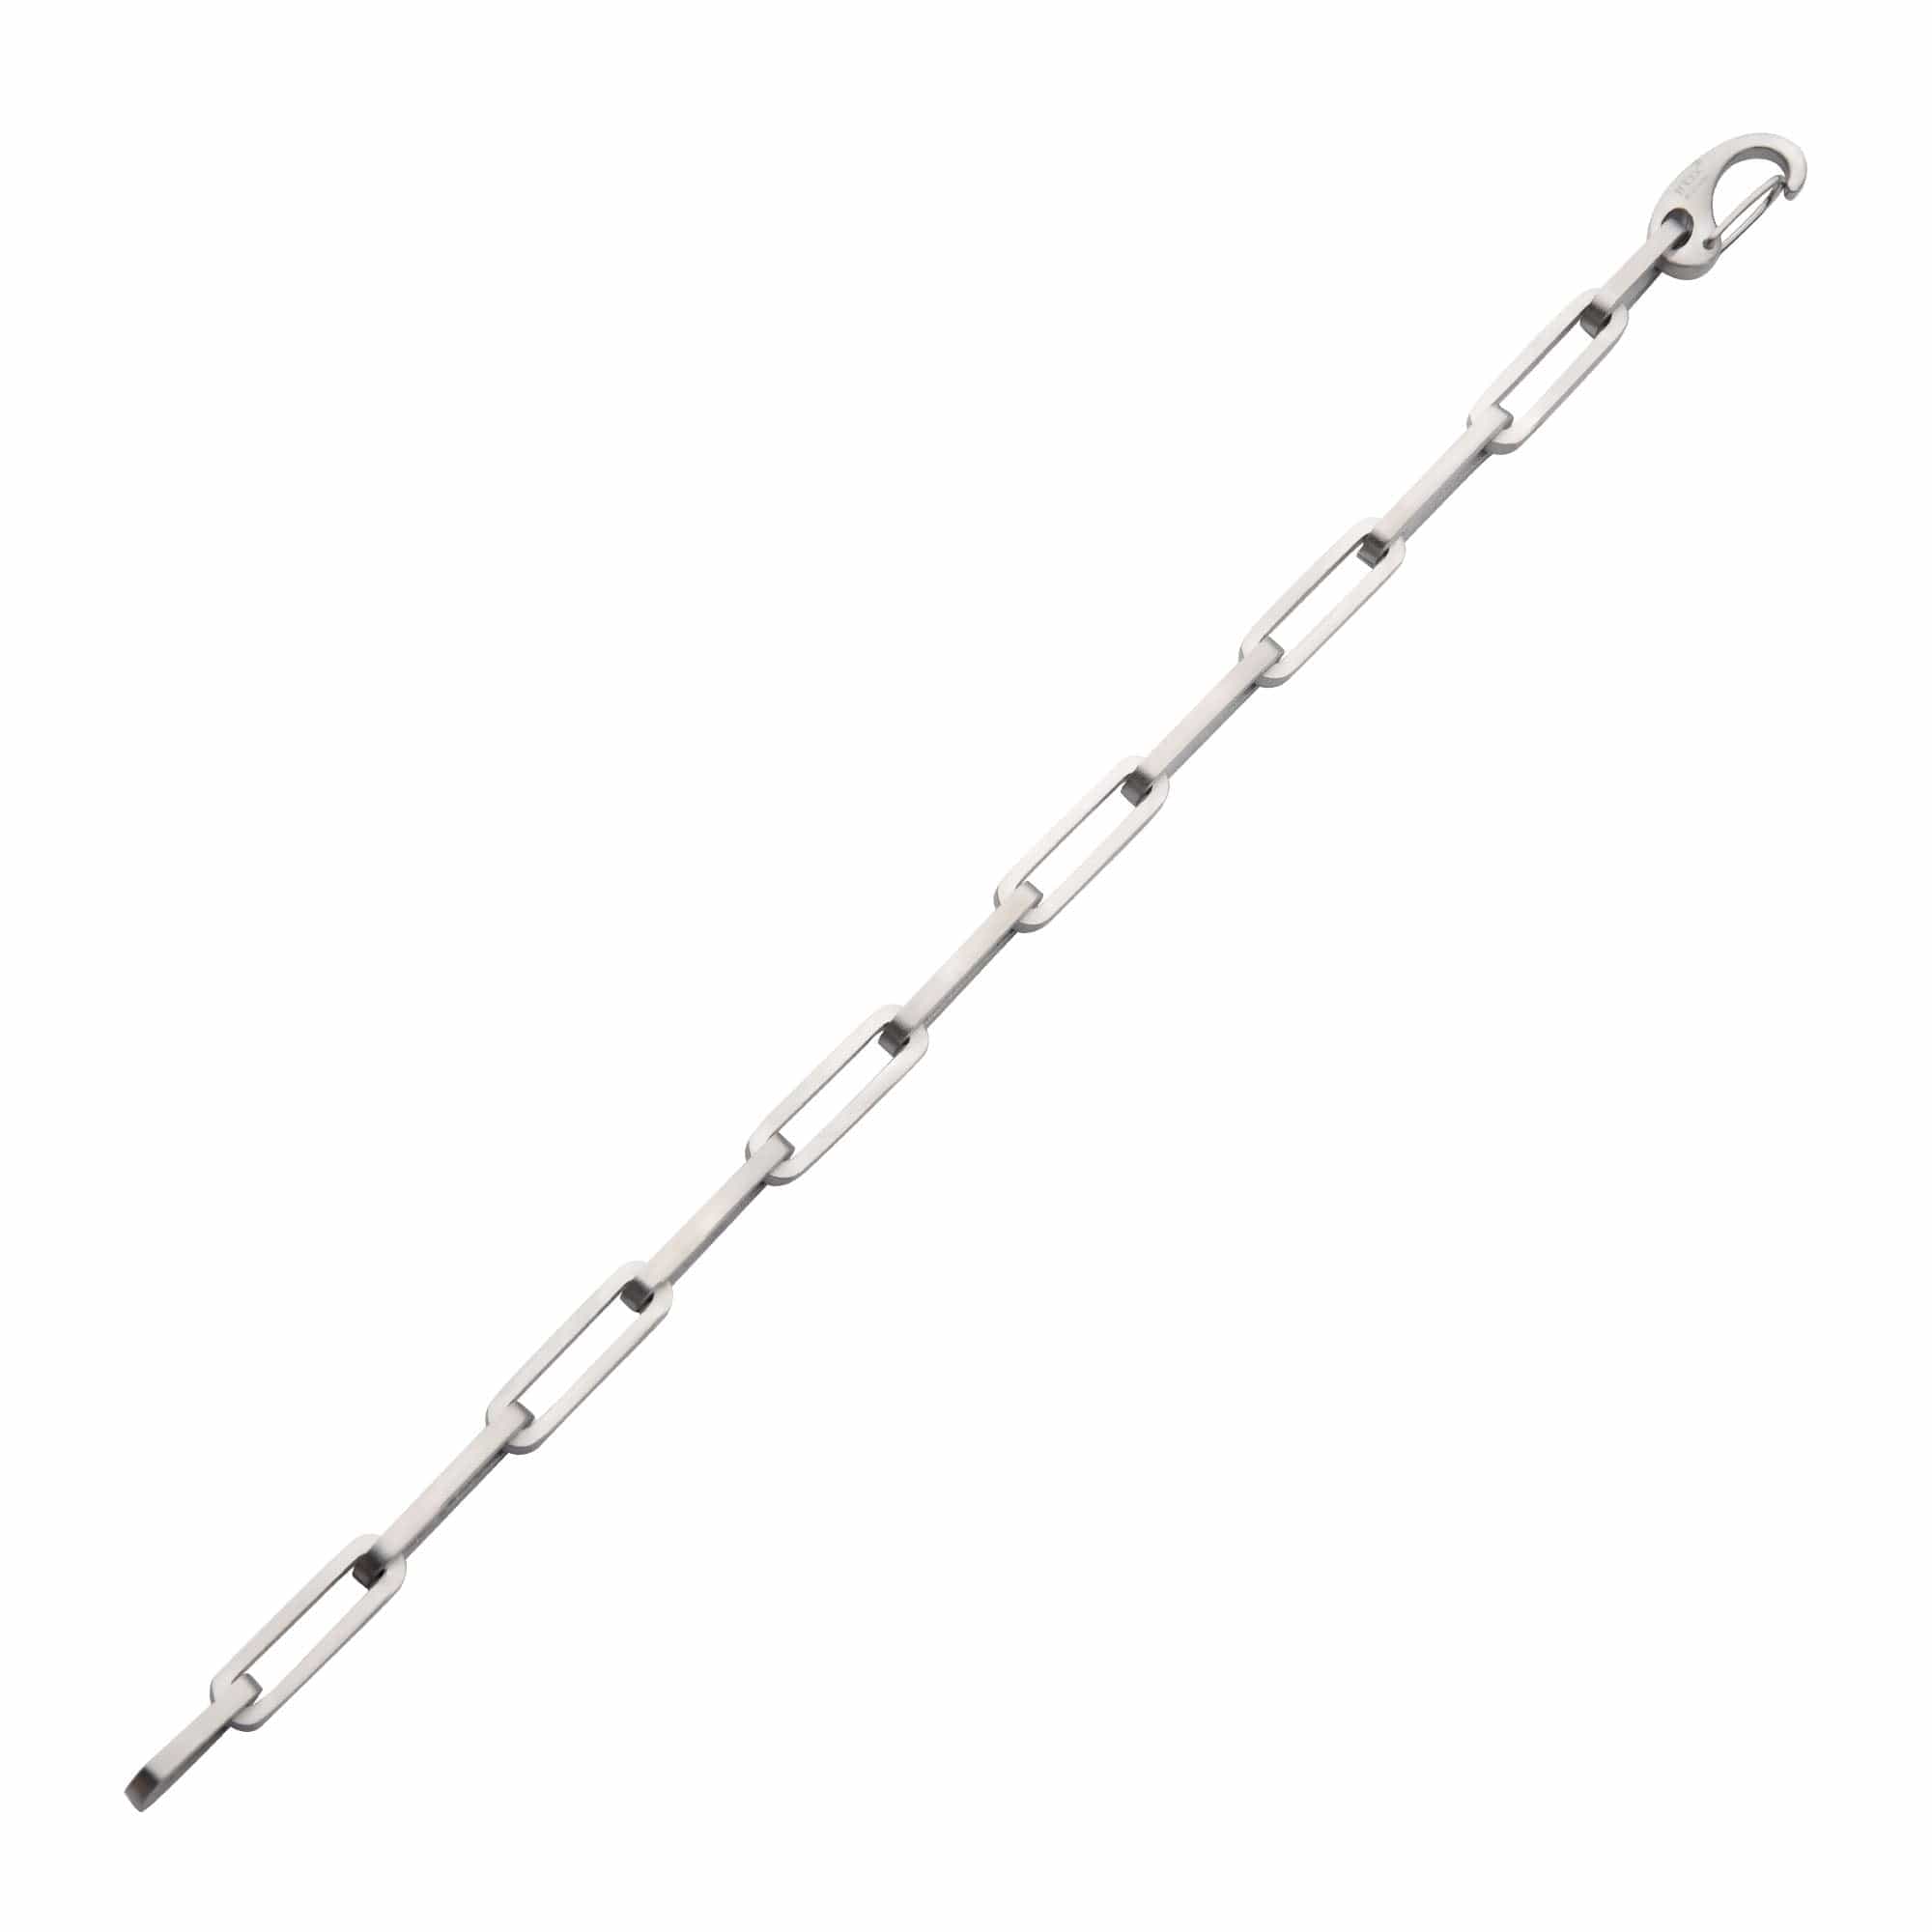 INOX JEWELRY Bracelets Silver Stainless Steel 6mm Matte Finish Paperclip Link Chain Bracelet